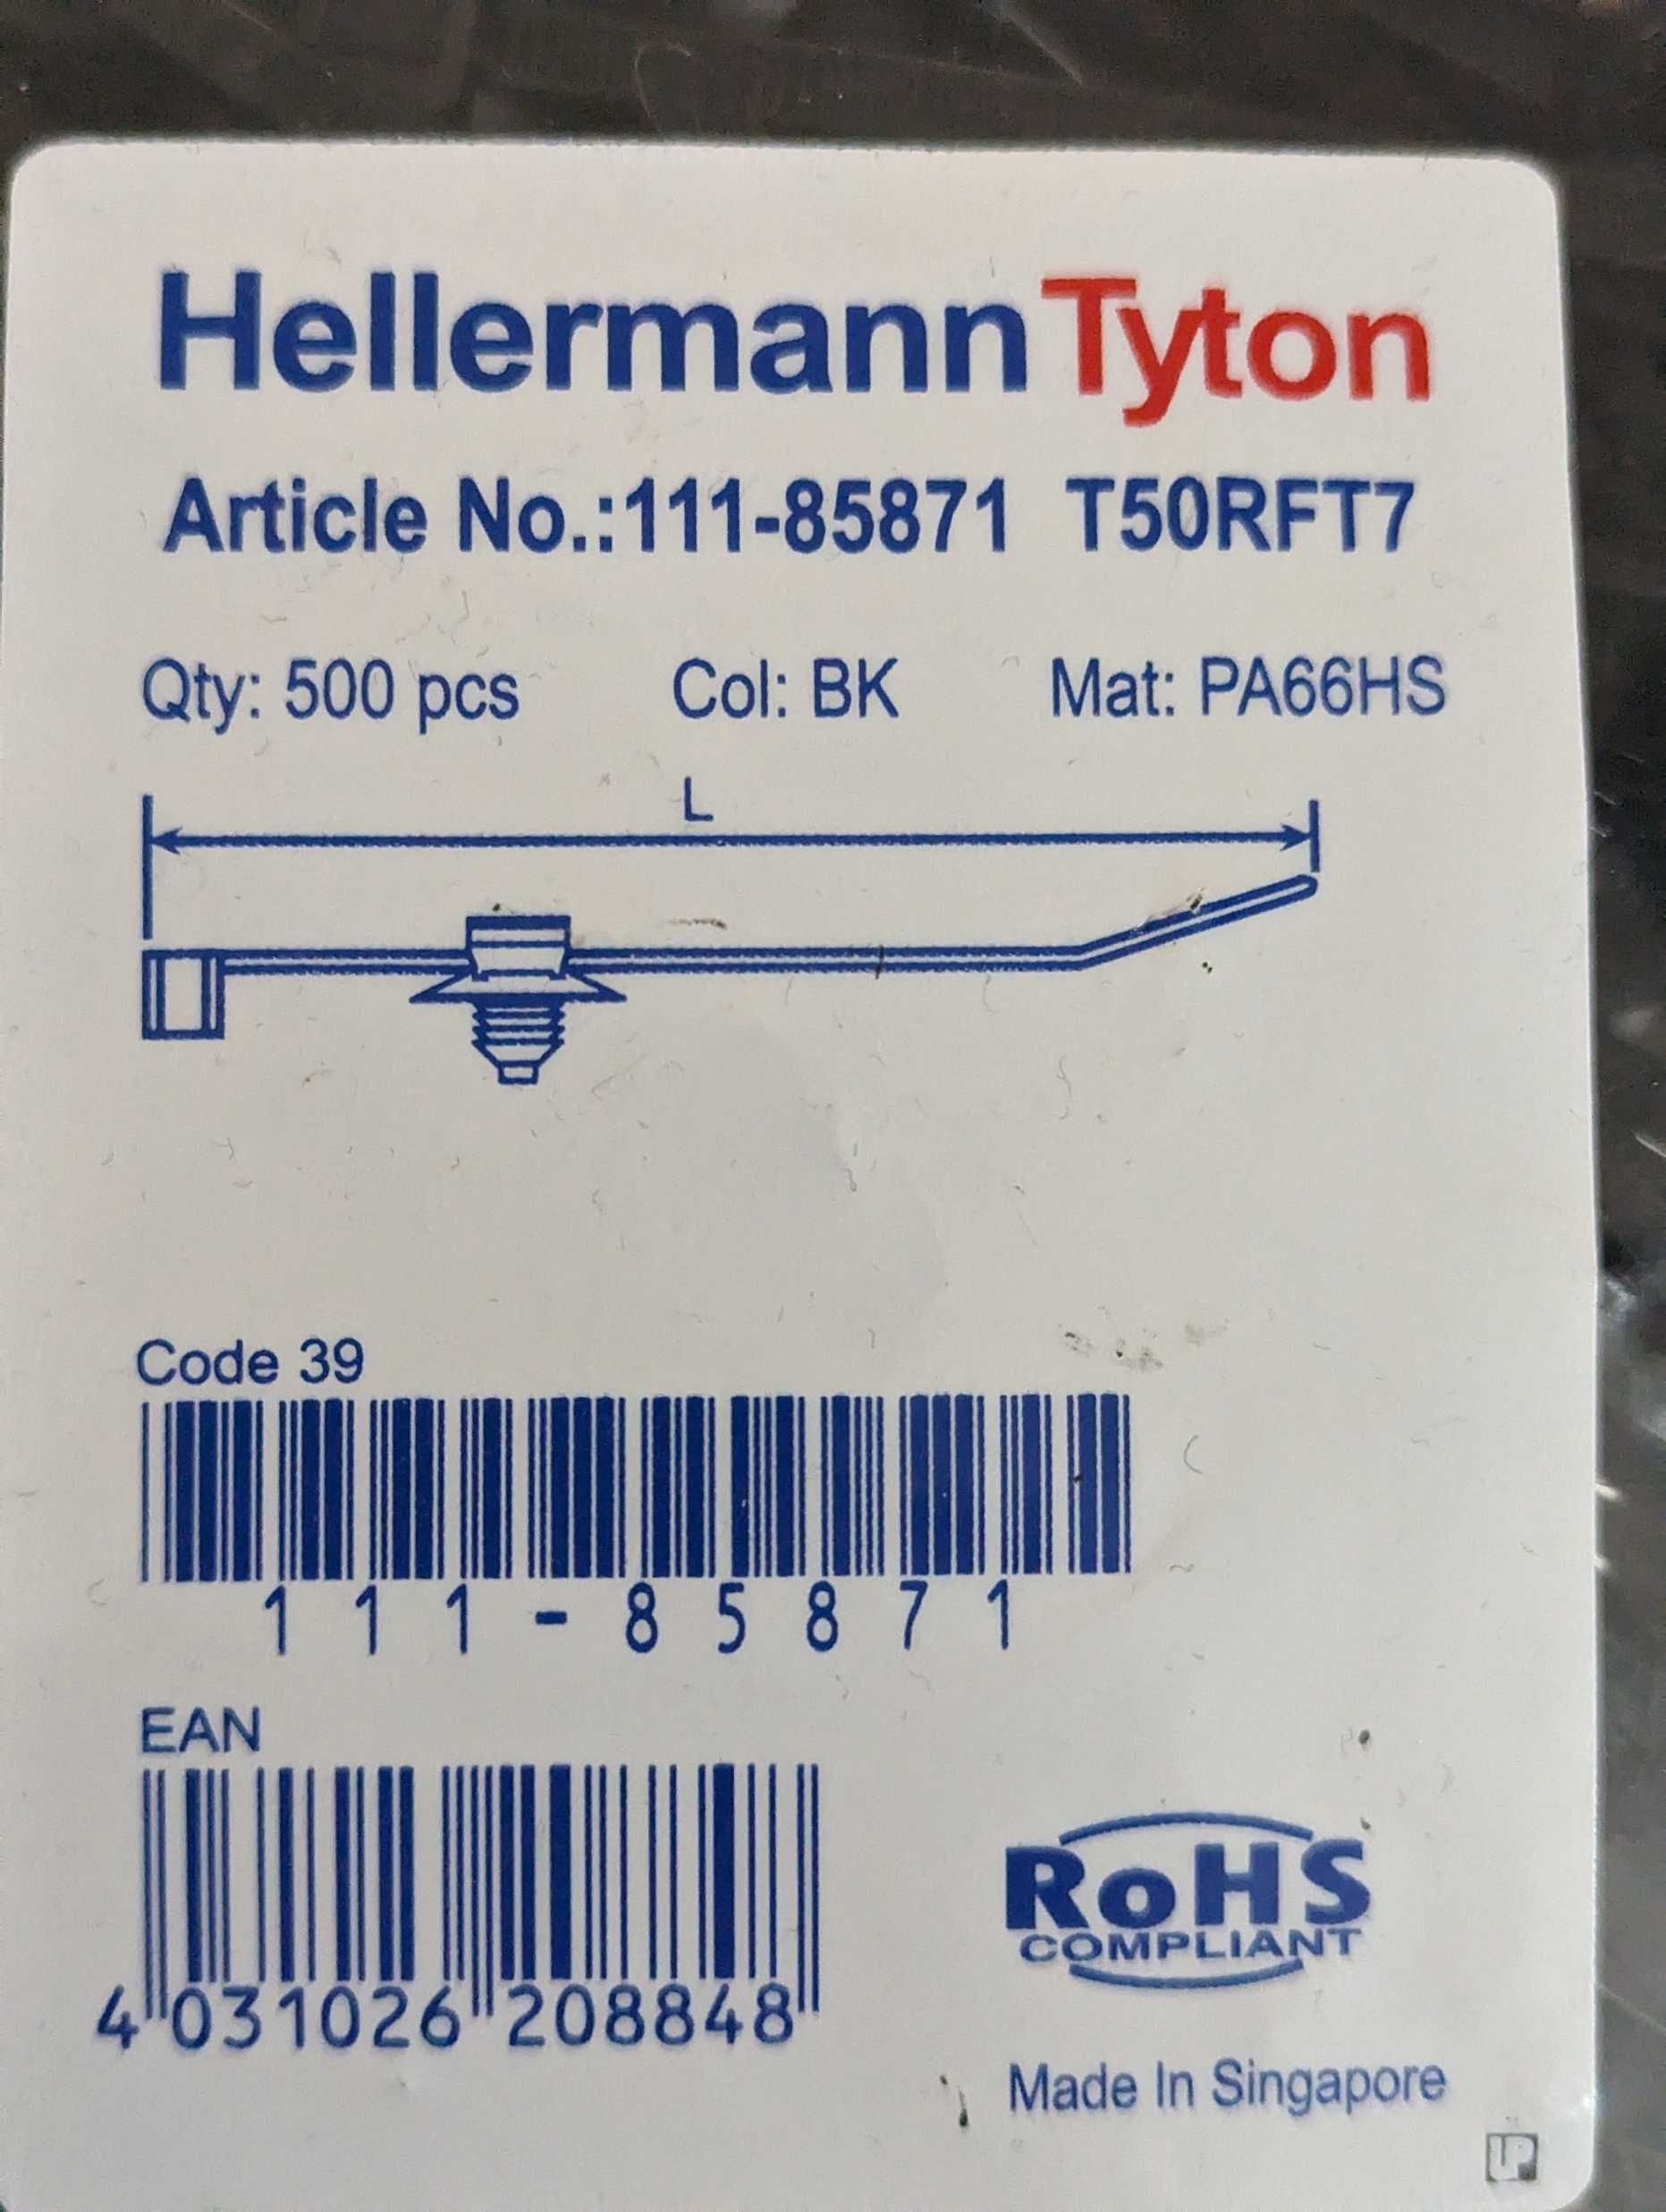 Opaski zaciskowe HellermannTyton trytyki 500szt.